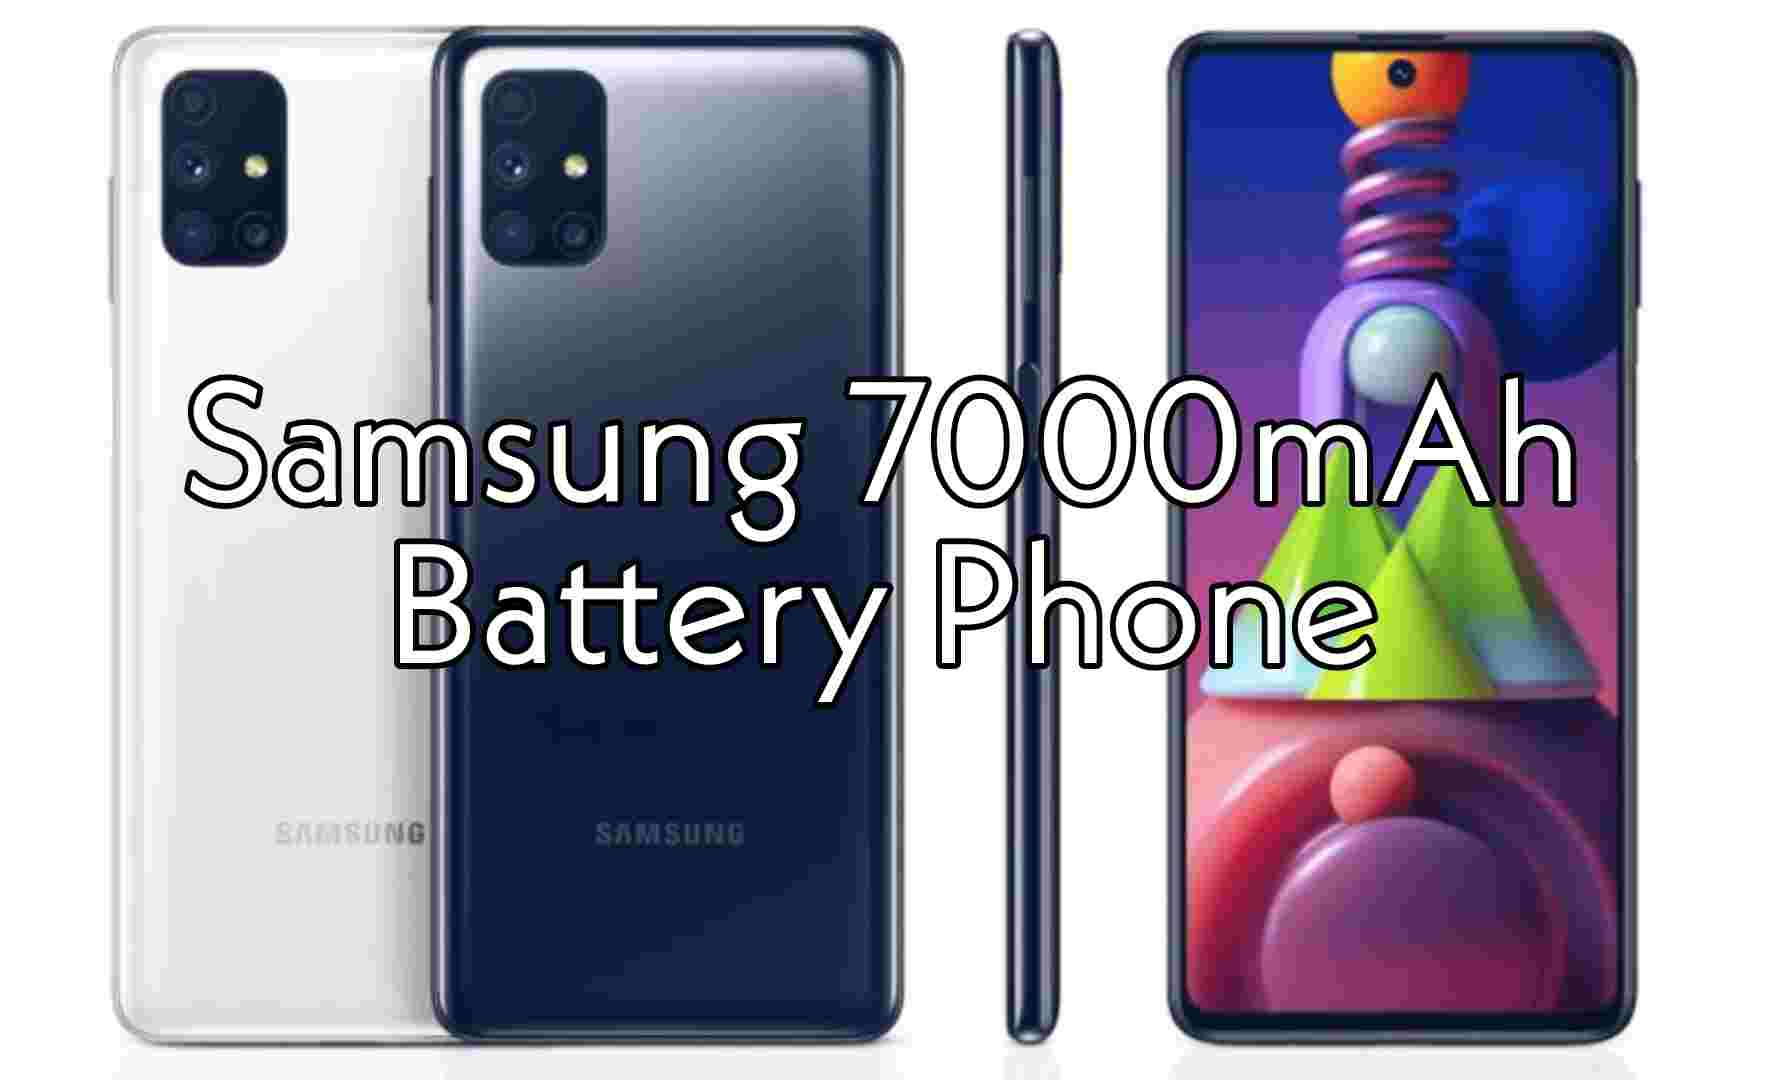 Samsung 7000mAh battery phone. Samsung Best Battery backup phone 2022.